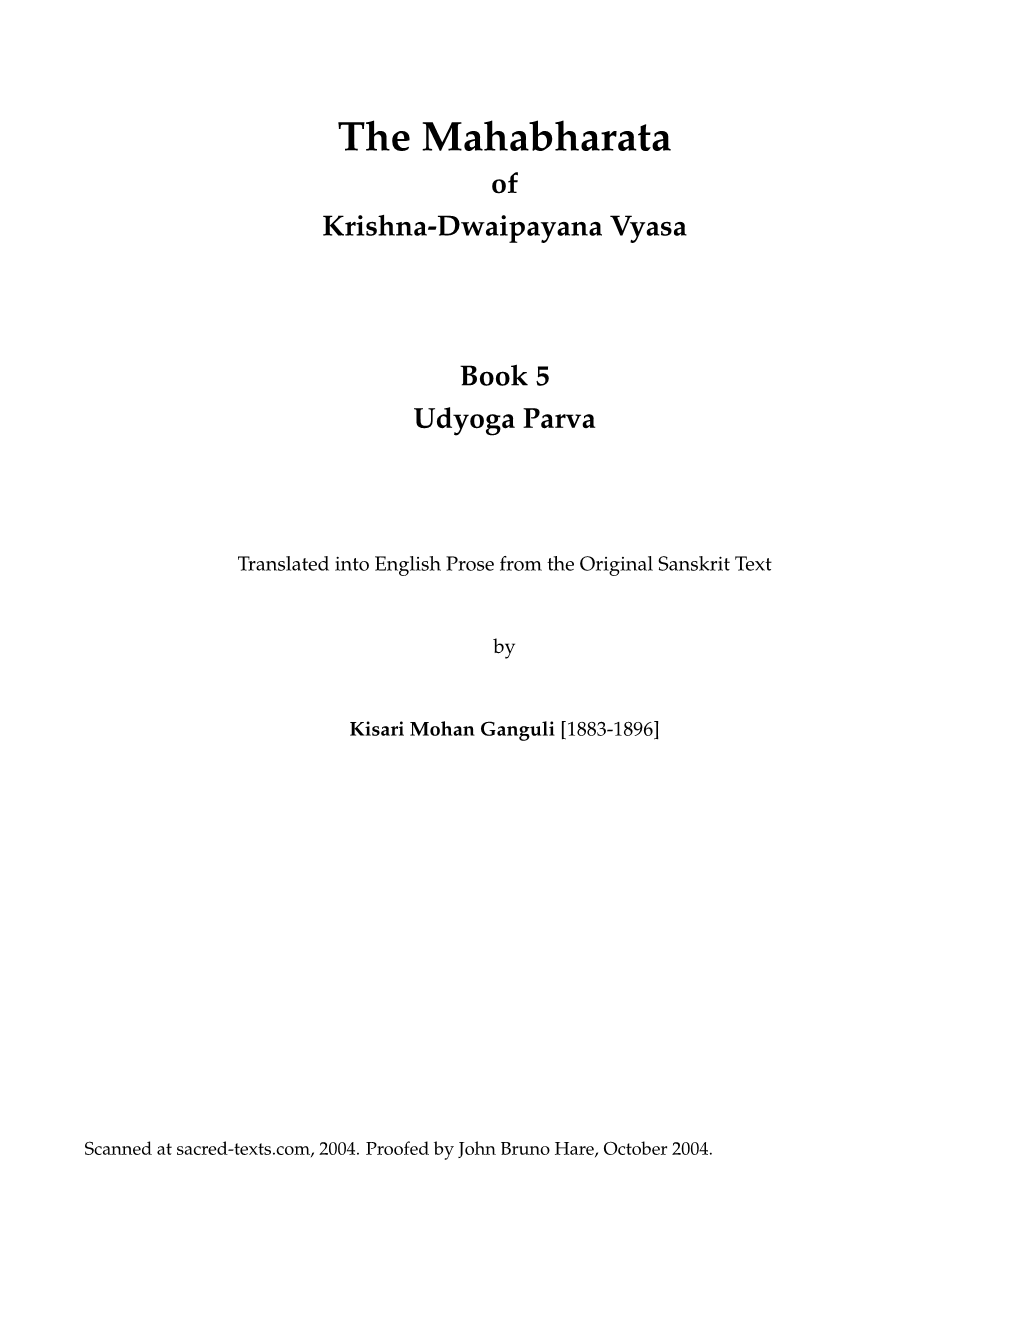 Of Krishna-Dwaipayana Vyasa Book 5 Udyoga Parva